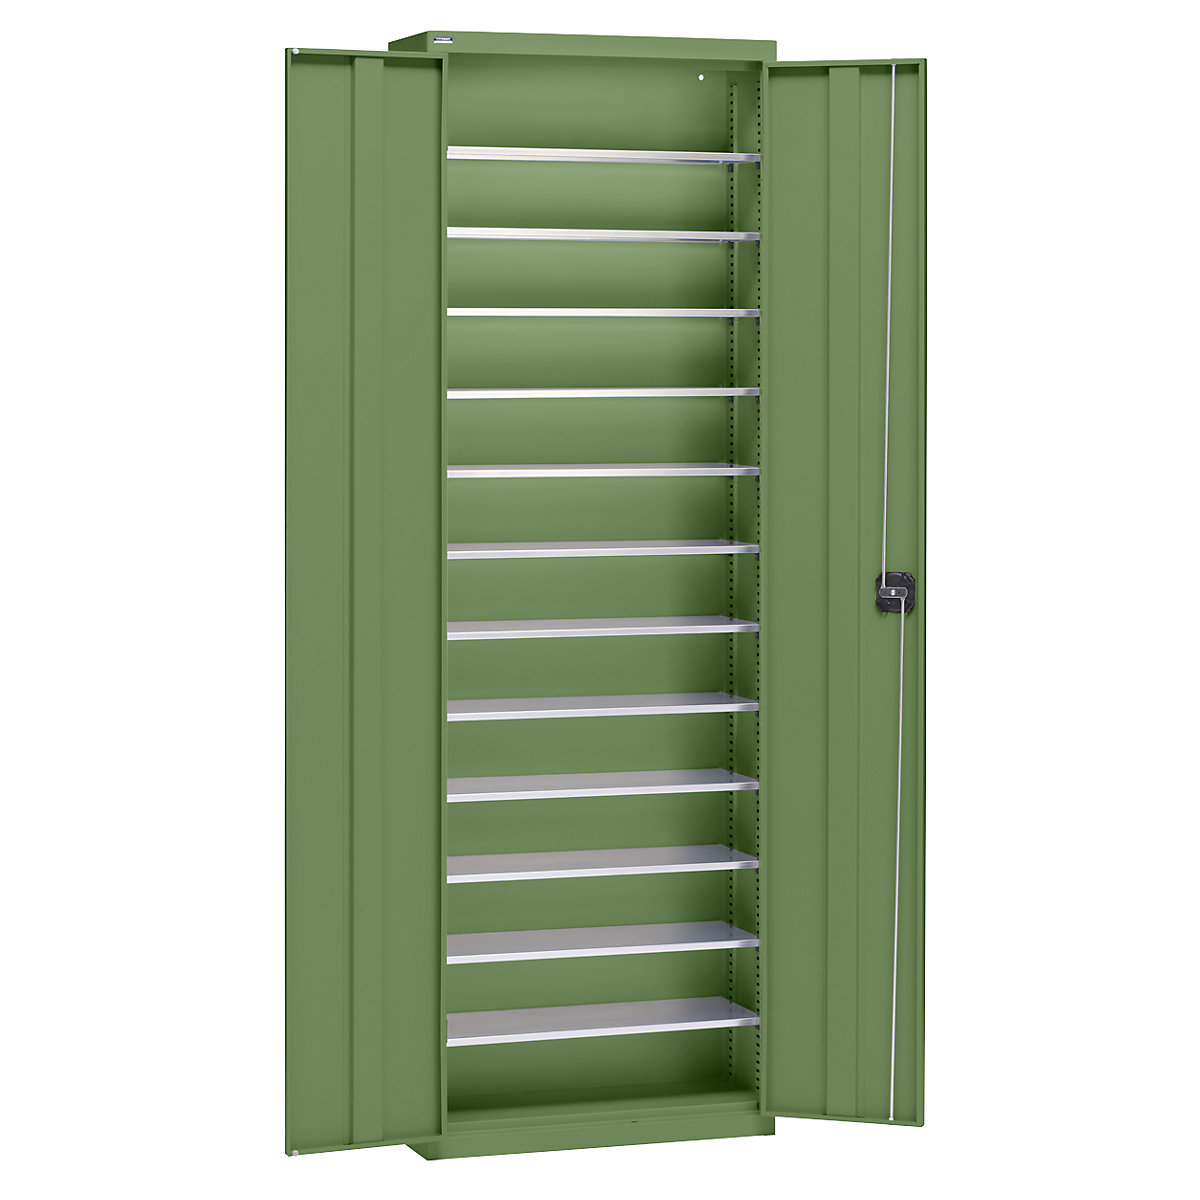 Storage cupboard made of sheet steel – eurokraft pro, height 2000 mm, reseda green RAL 6011, 12 shelves-14